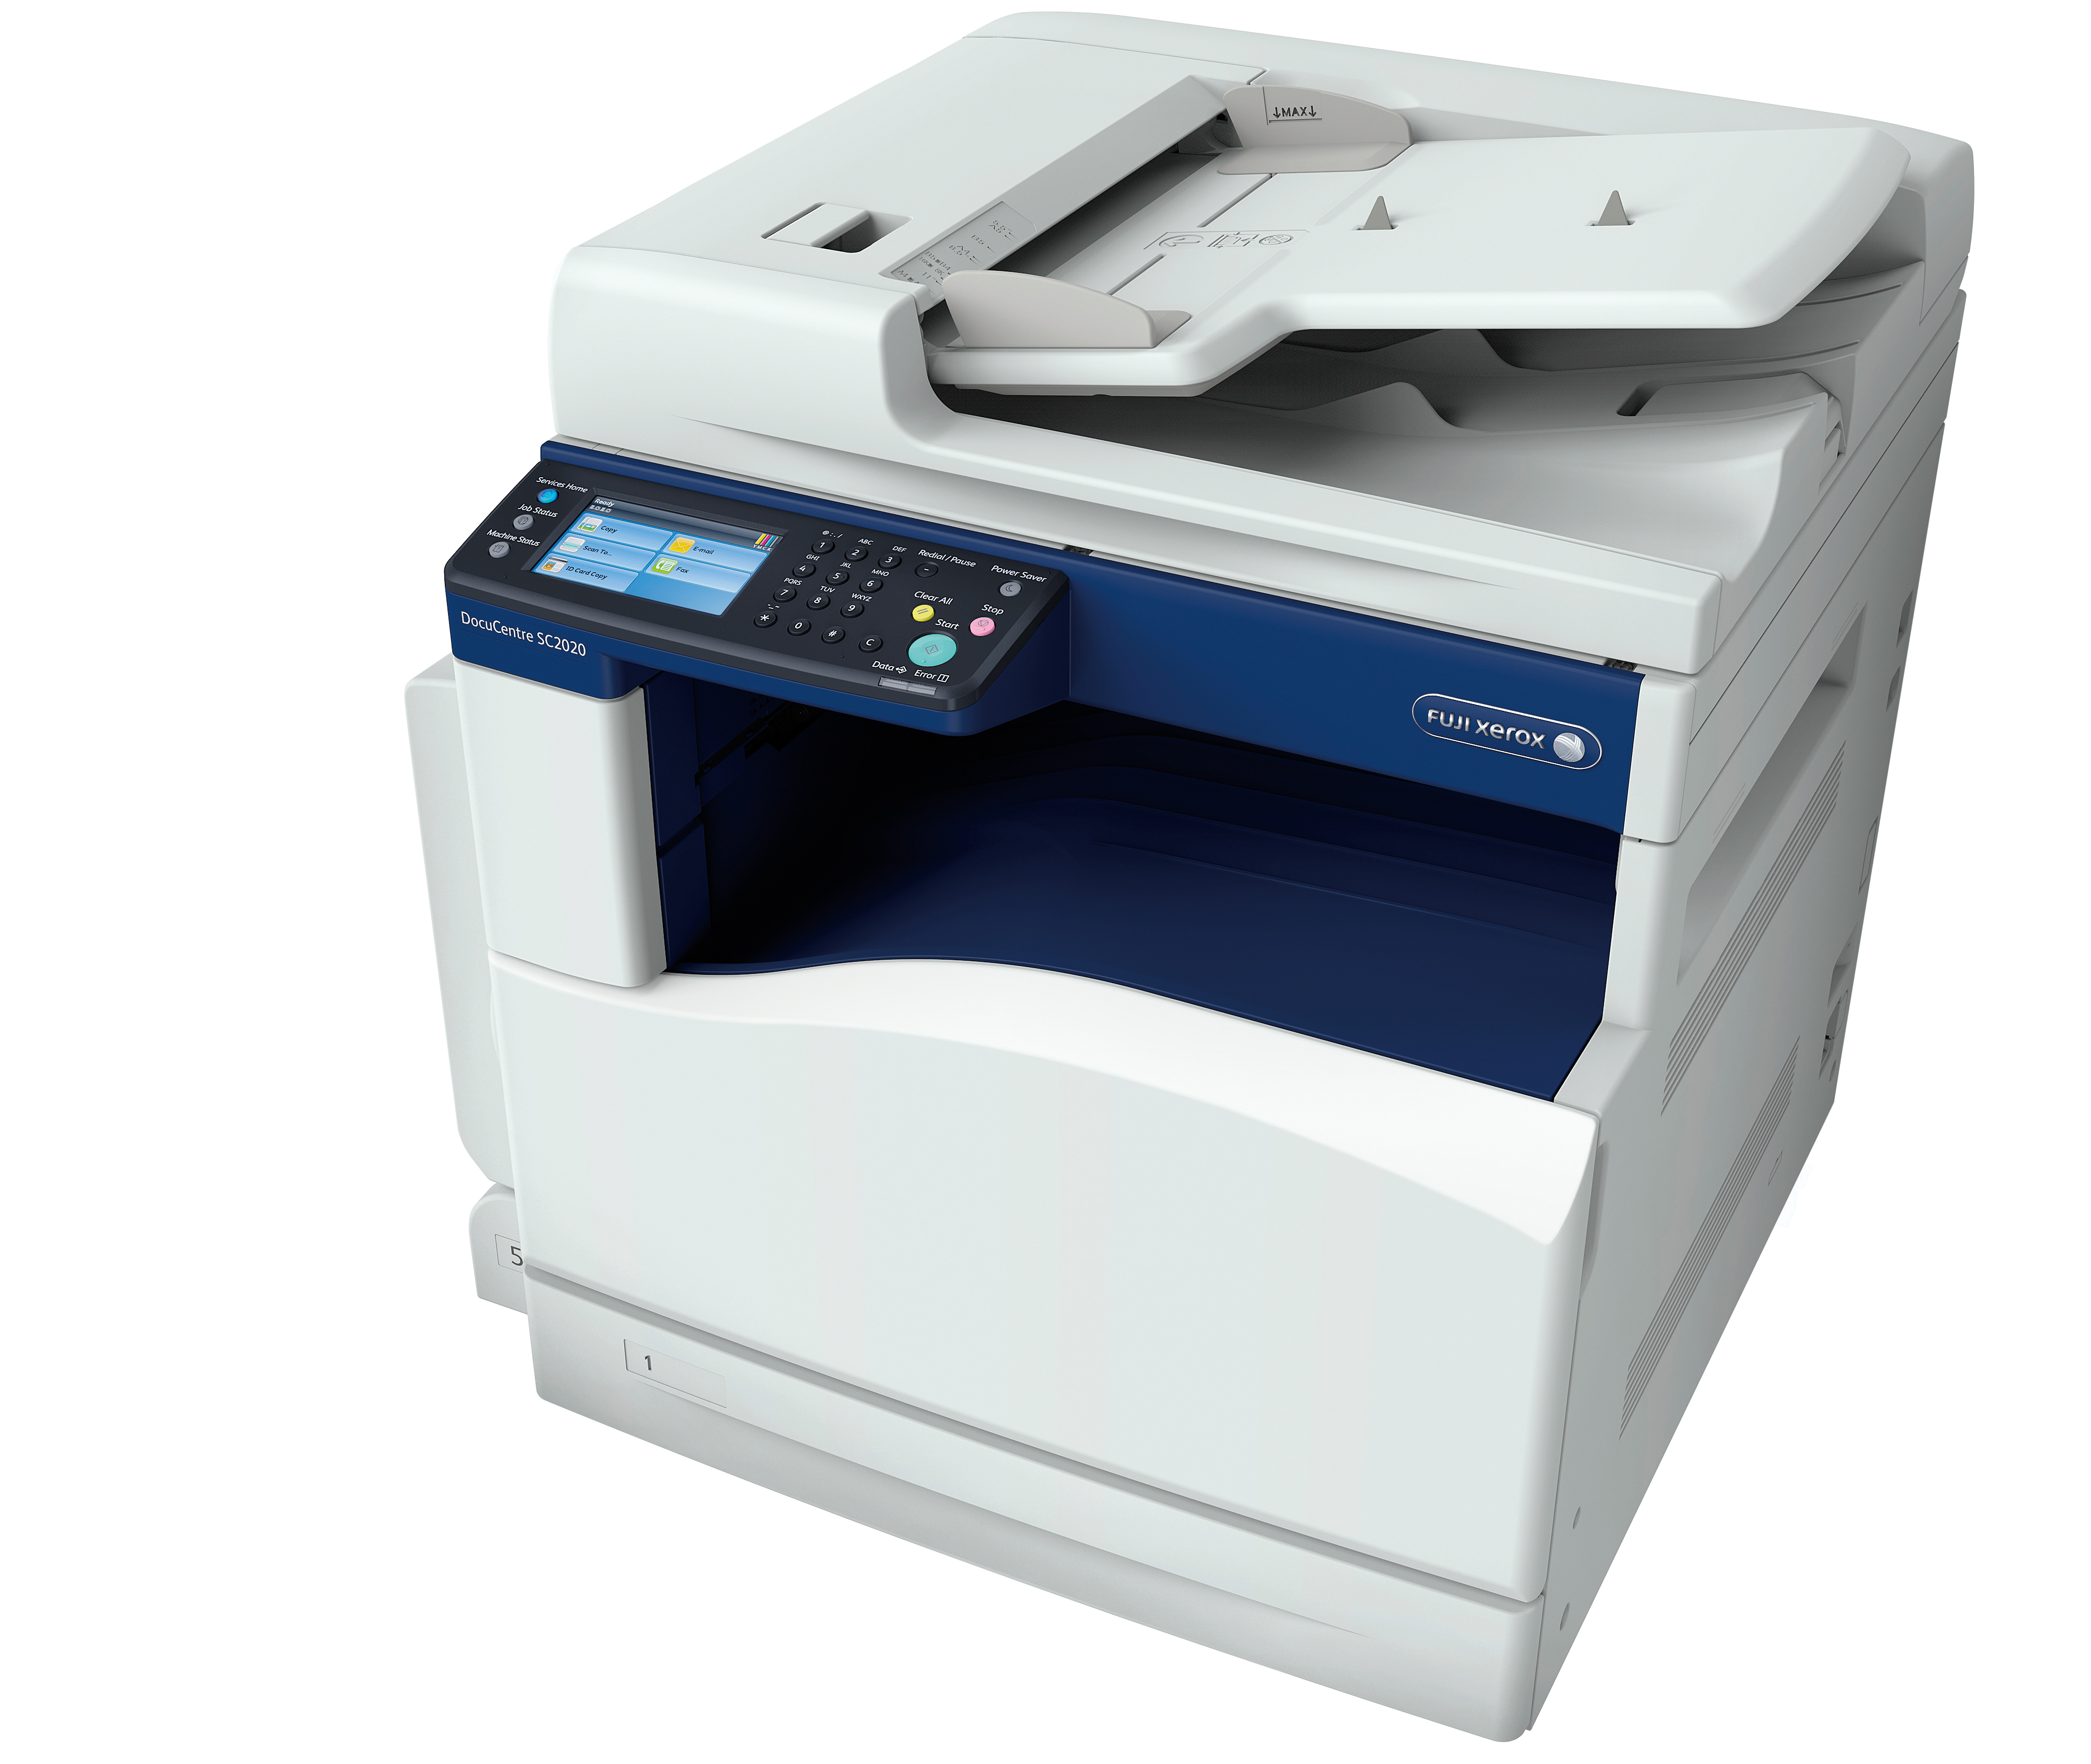 Máy Photocopy màu Fuji Xerox DocuCentre SC2020